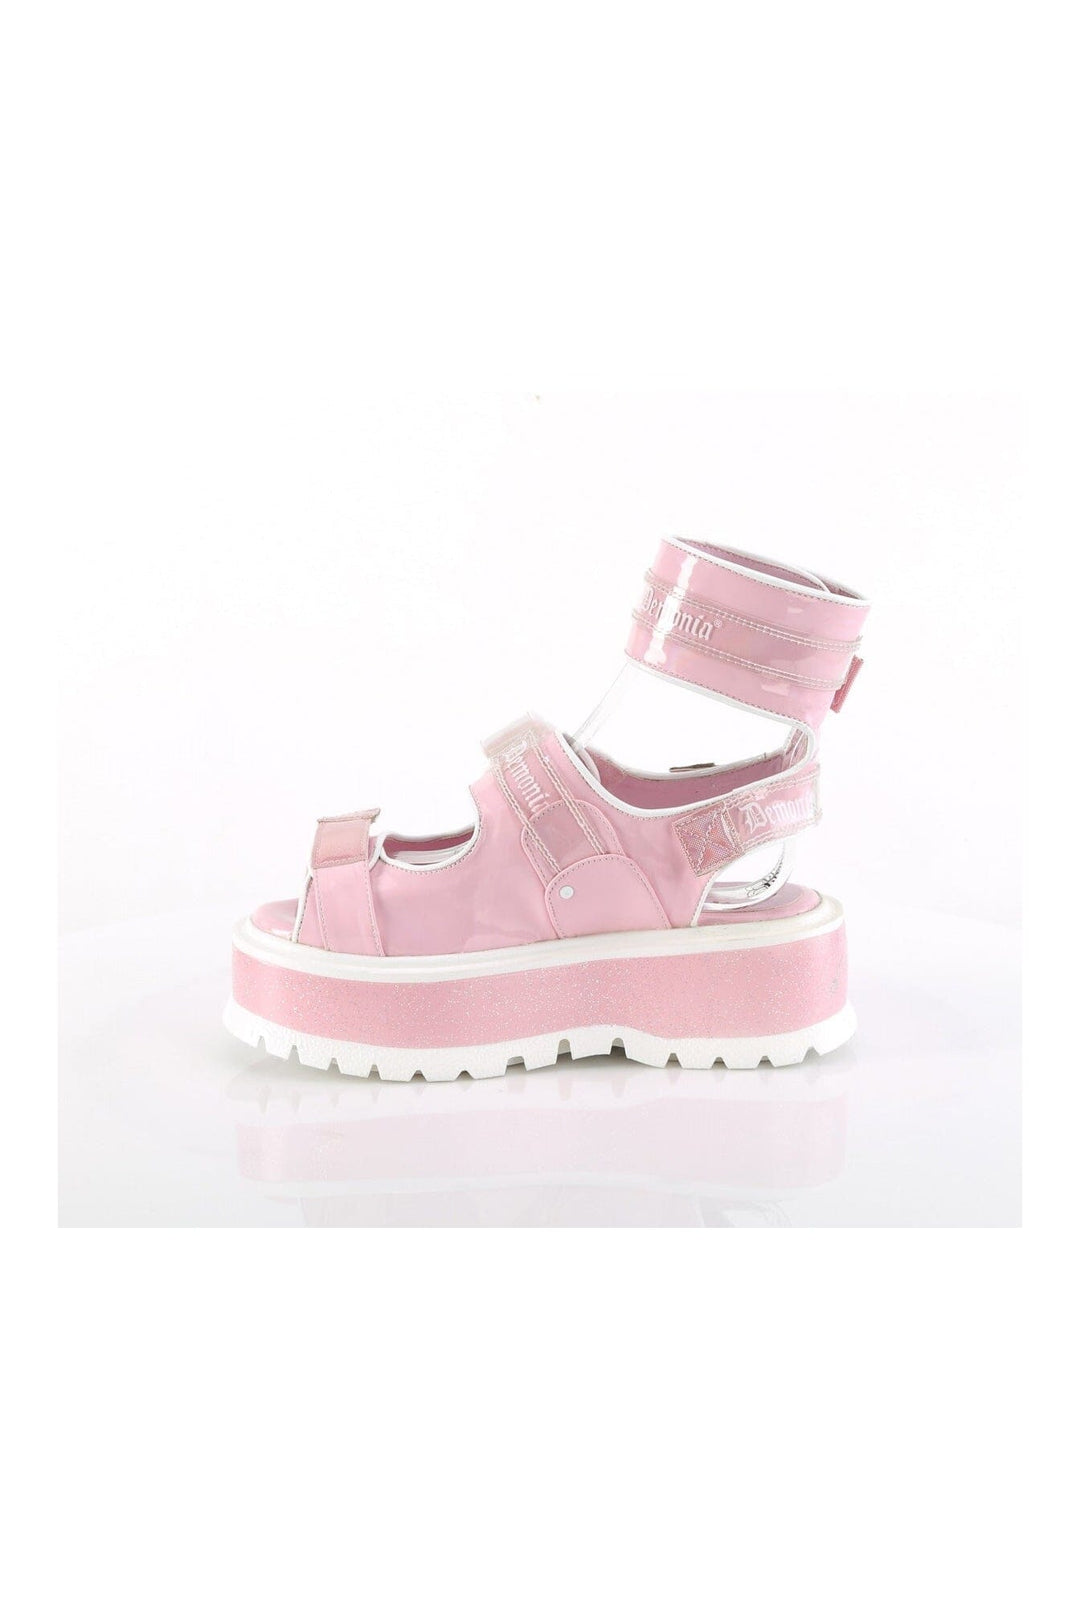 SLACKER-15B Pink Hologram Patent Sandal-Sandals-Demonia-SEXYSHOES.COM